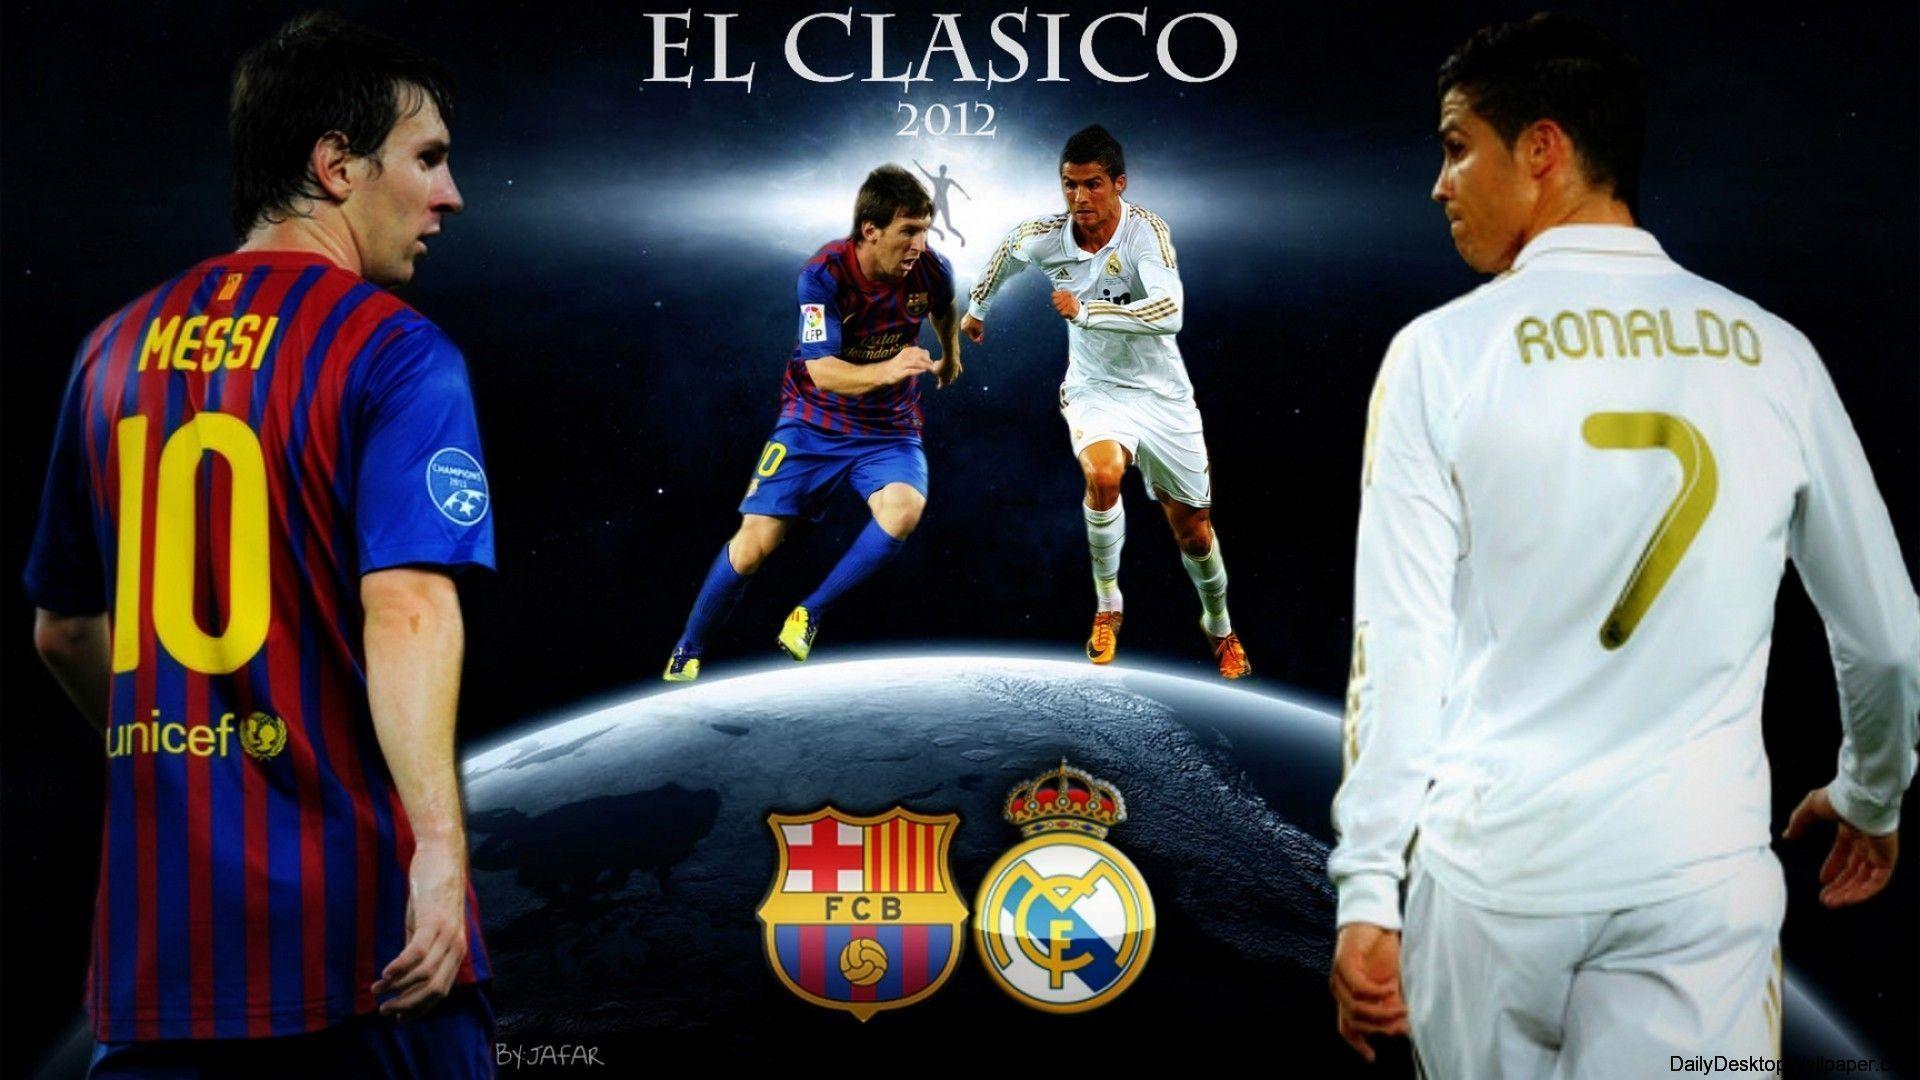 Messi Vs Ronaldo Wallpaper 2015 HD. All